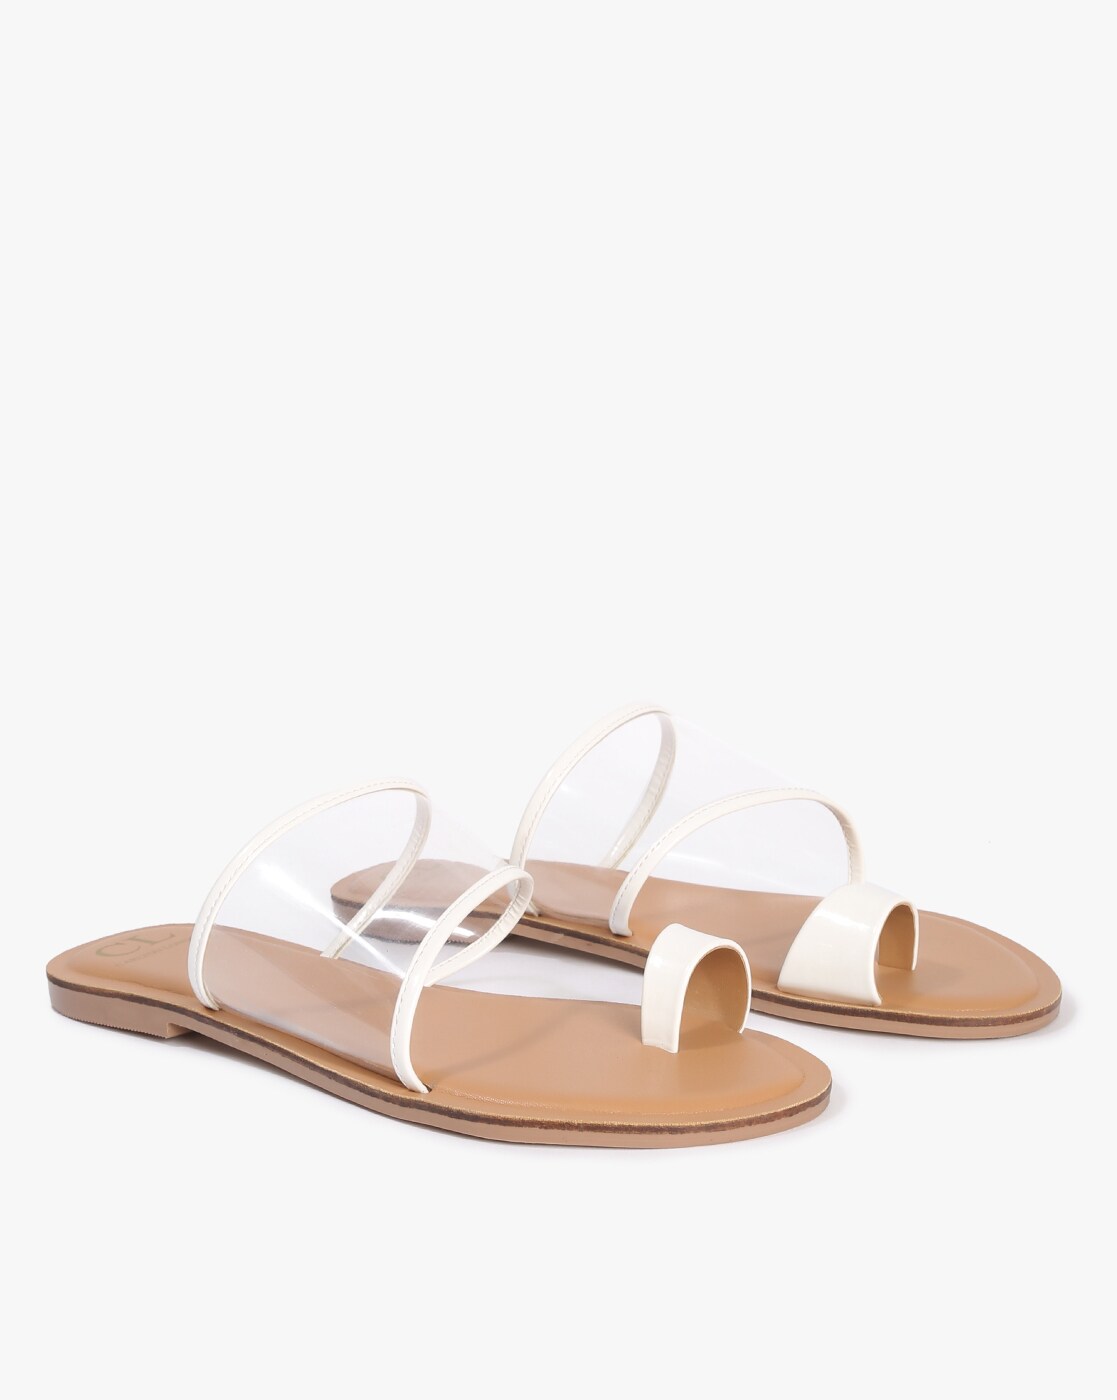 Cocobelle Flat Thong Sandals White Shells on Straps sz 38 | eBay